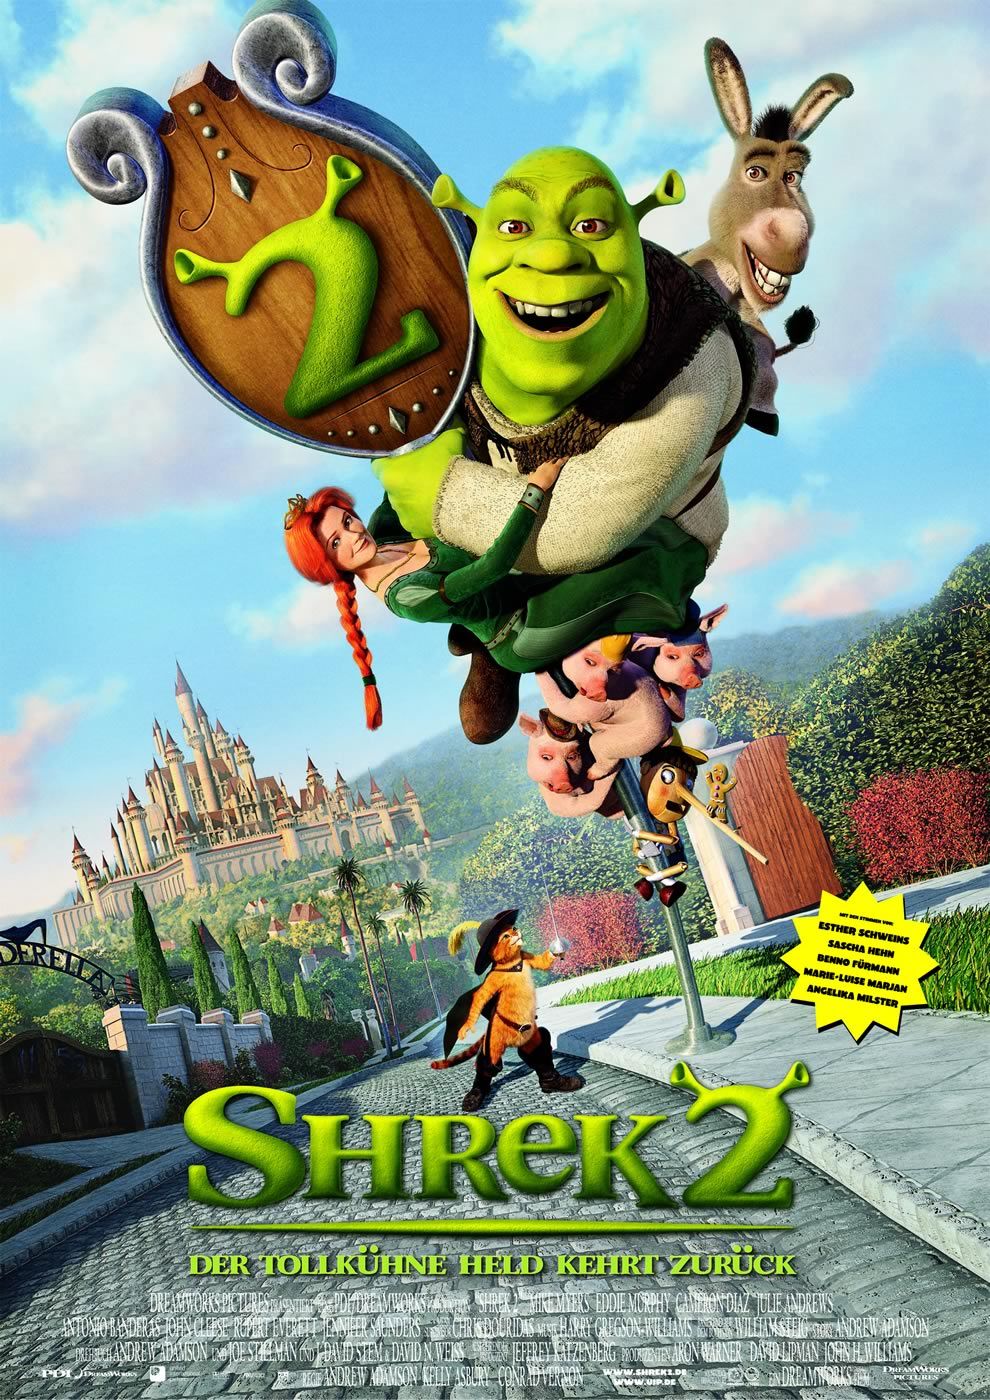 Free download ShrekShrek 2 4 High Definition Widescreen Wallpaper [990x1400] for your Desktop, Mobile & Tablet. Explore Shrek 2 Wallpaper. Shrek Wallpaper, Shrek Wallpaper, Shrek 4 Wallpaper